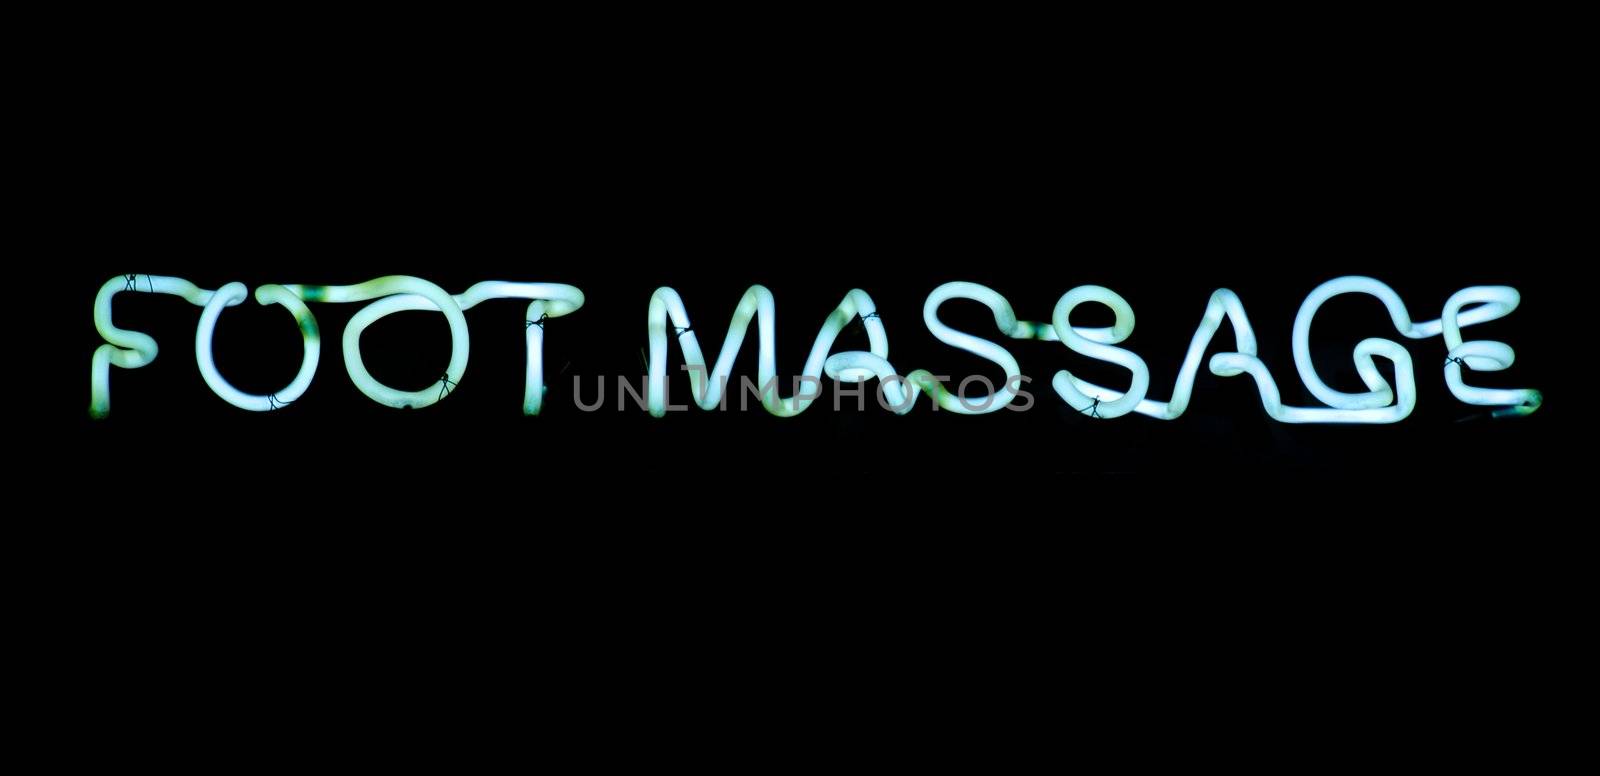 Foot massage blue  neon sign on black background